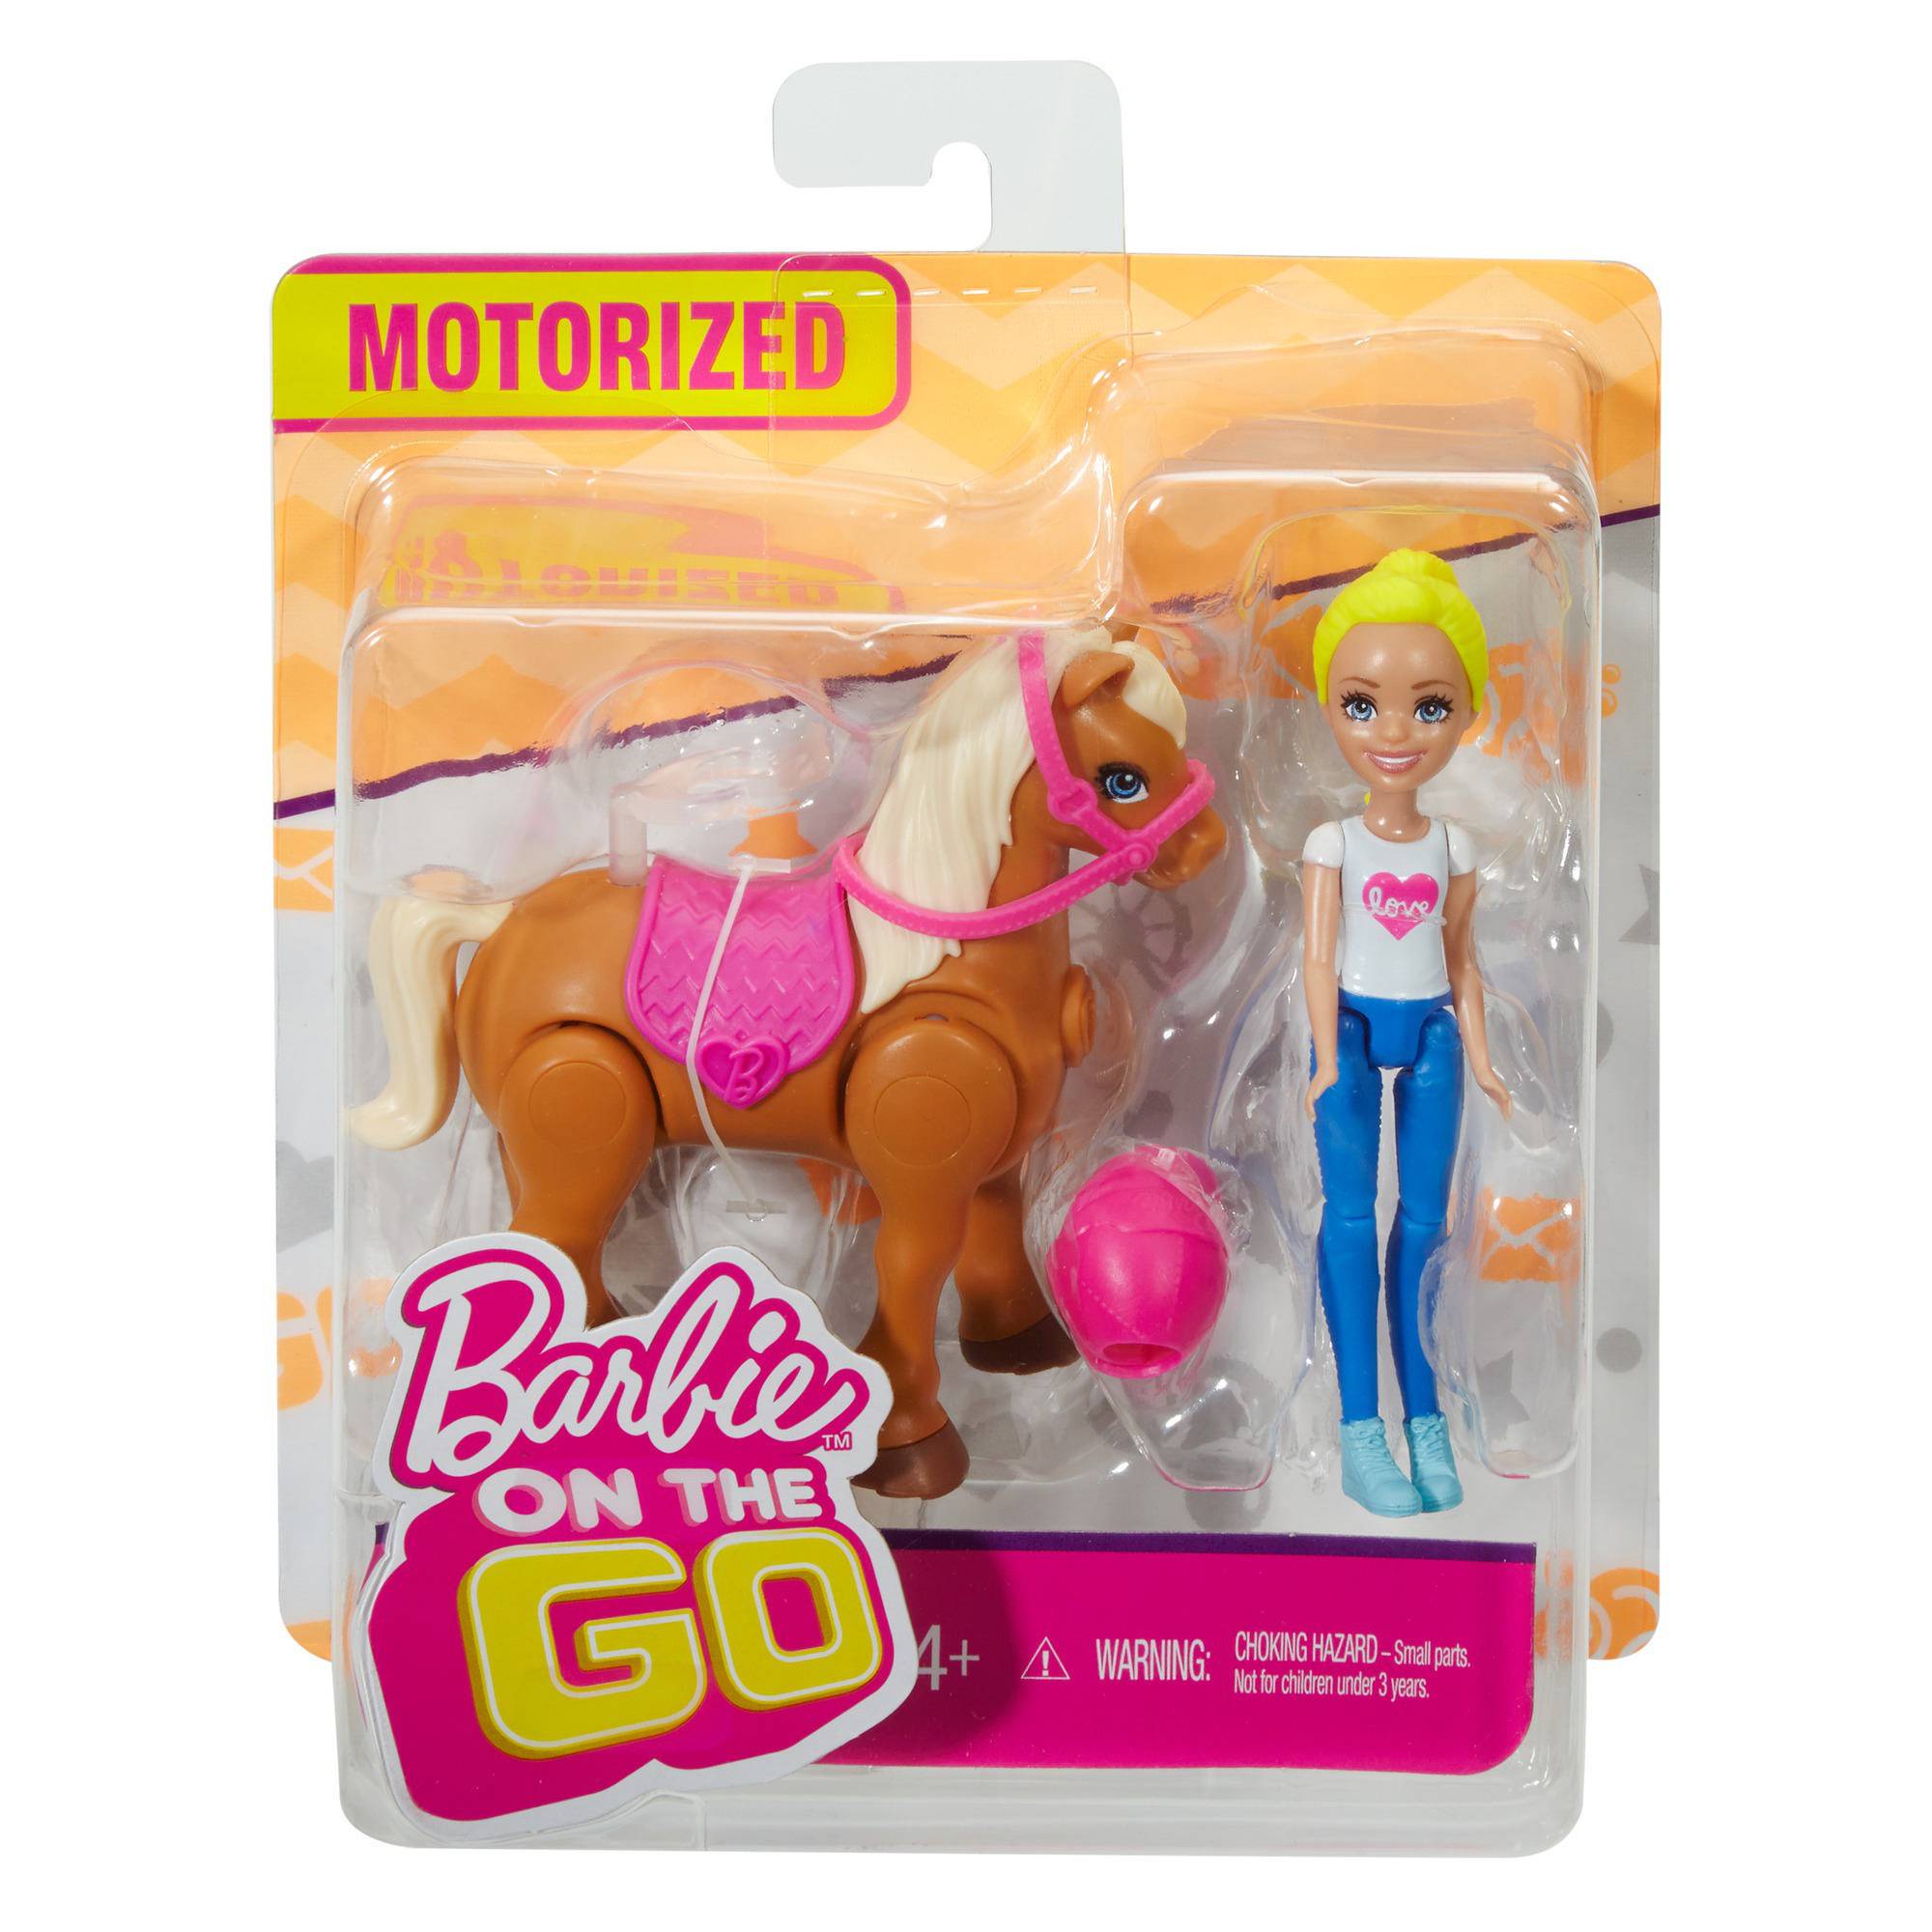 Мини куклы барби. Набор Barbie в движении мини-кукла с пони, 11 см, fhv60. Куклы Барби on the go. Мини кукла Барби в движении 11 см. Барби fhv55.